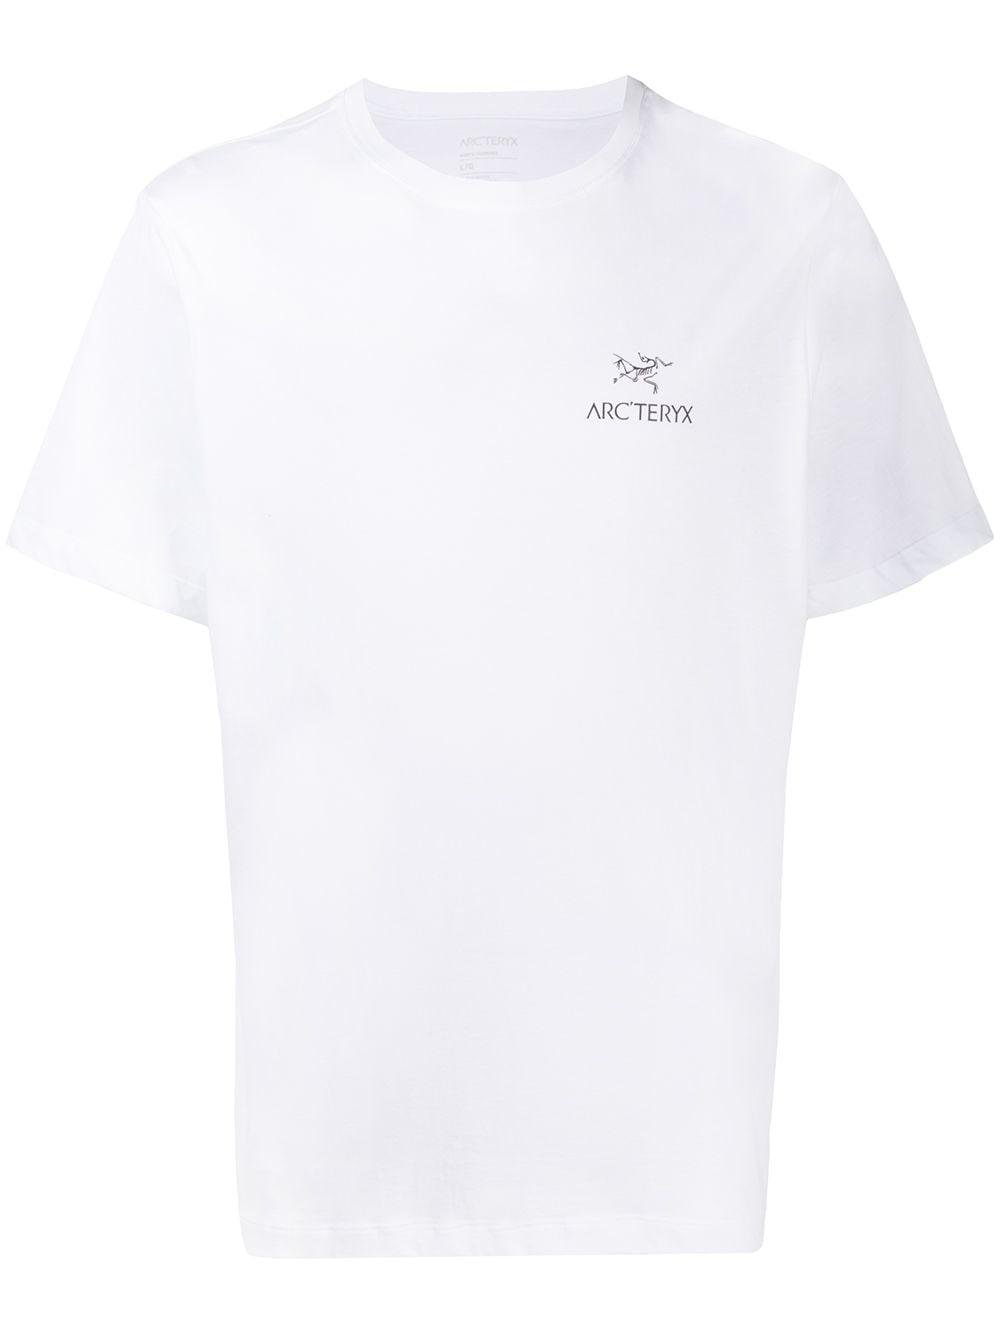 Arc'teryx Cotton Logo Print T-shirt in White for Men - Lyst